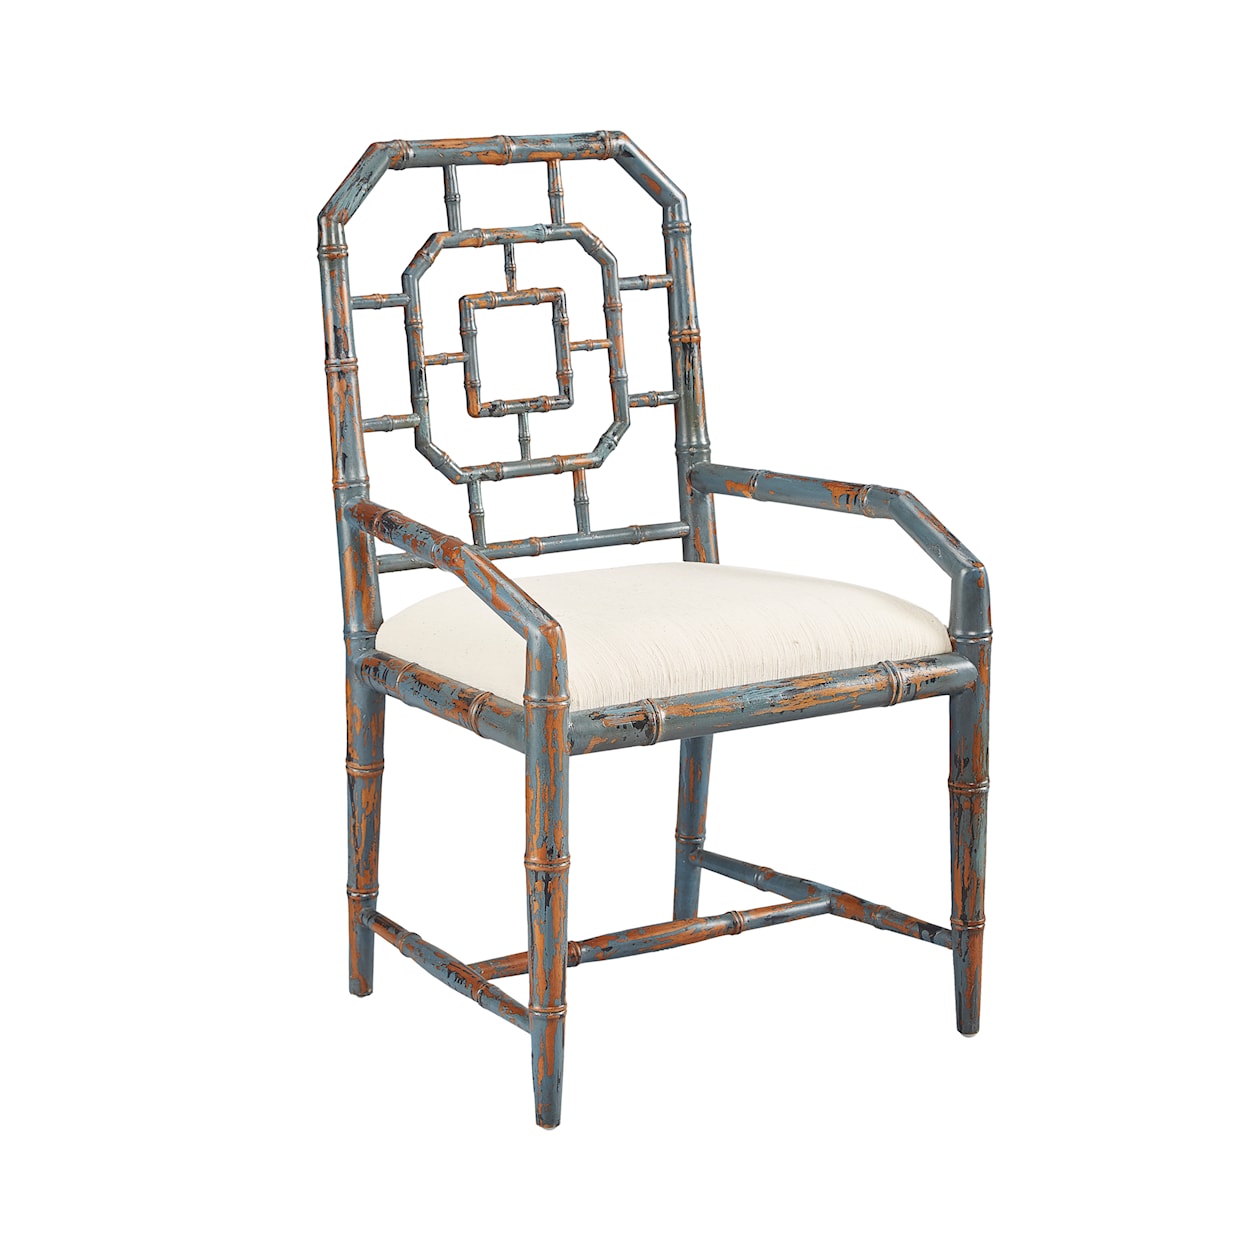 Furniture Classics Furniture Classics Lahara Chair